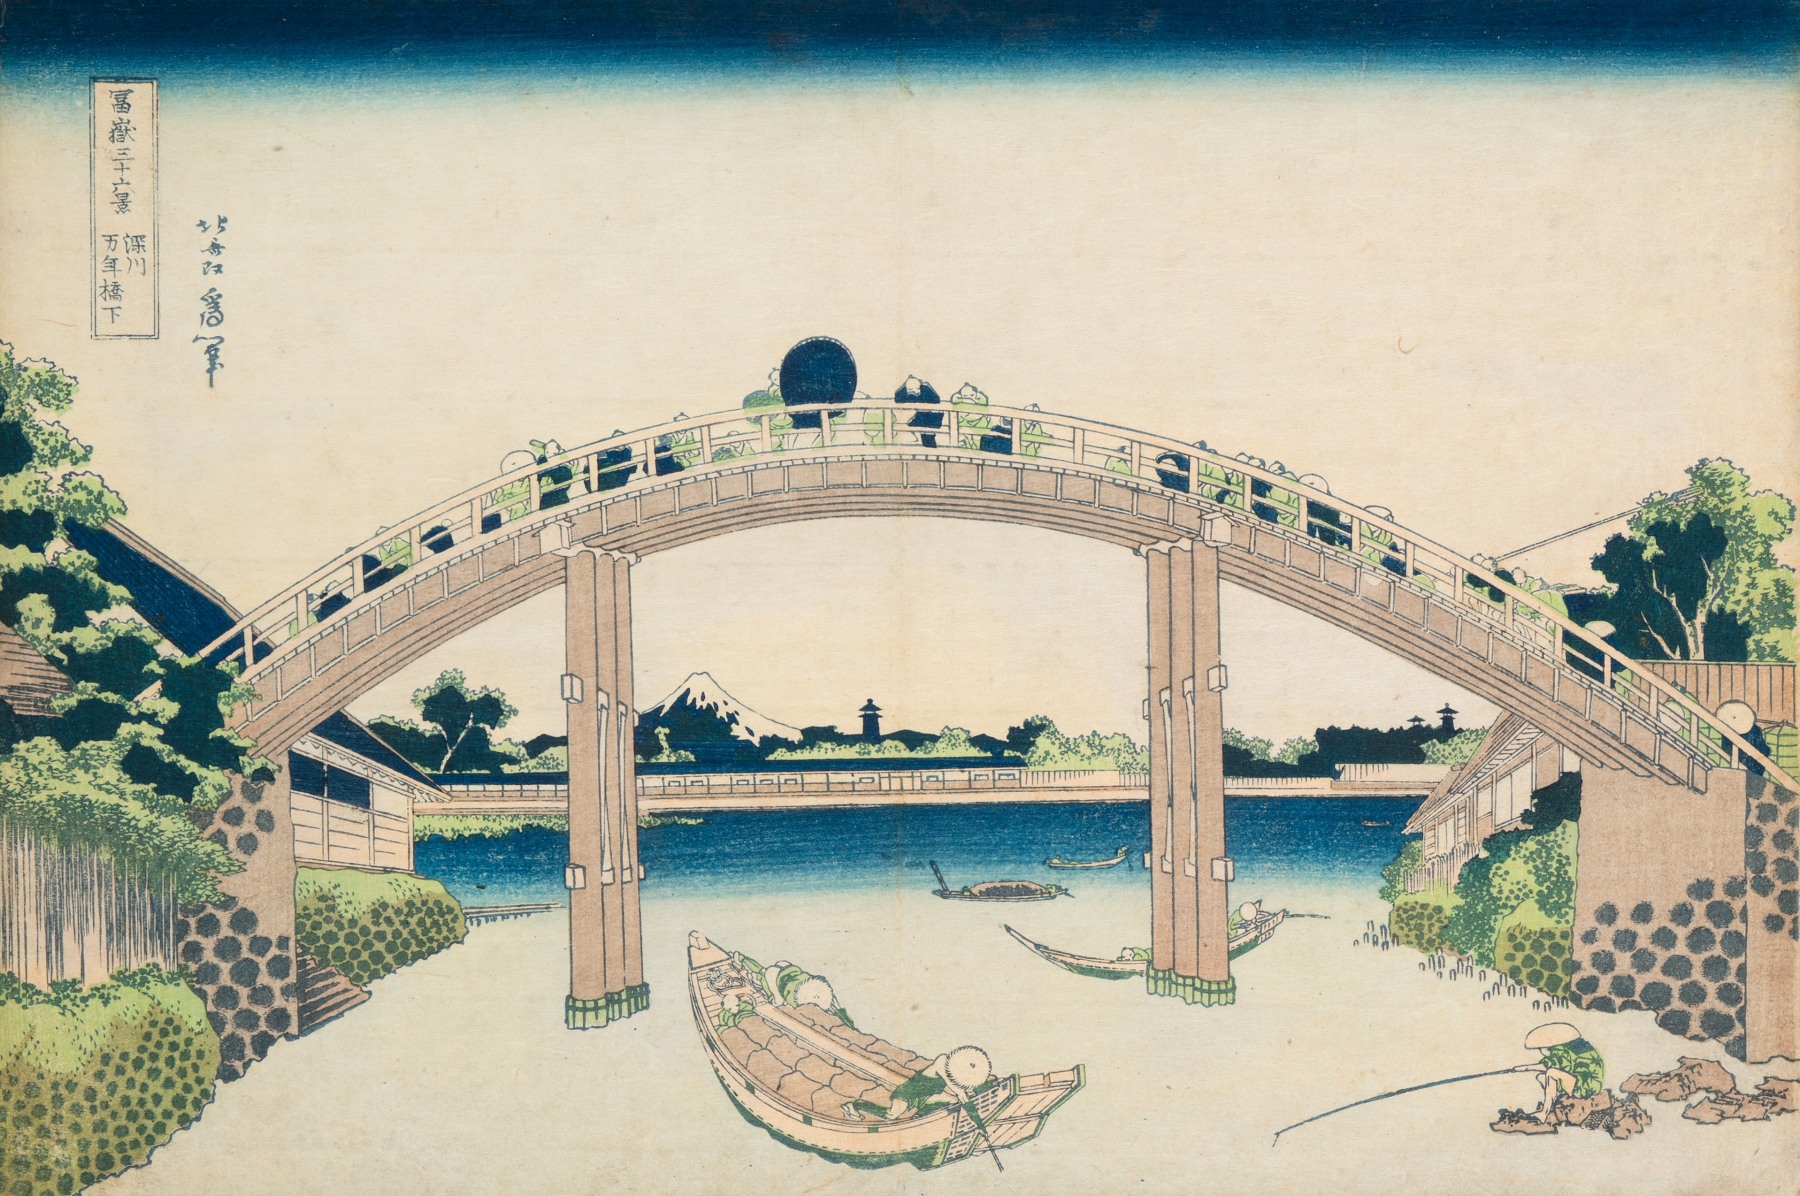 Katsushika Hokusai (1760-1849), Under Mannen Bridge in Fukagawa Province, Thirty-six Views of Mount Fuji